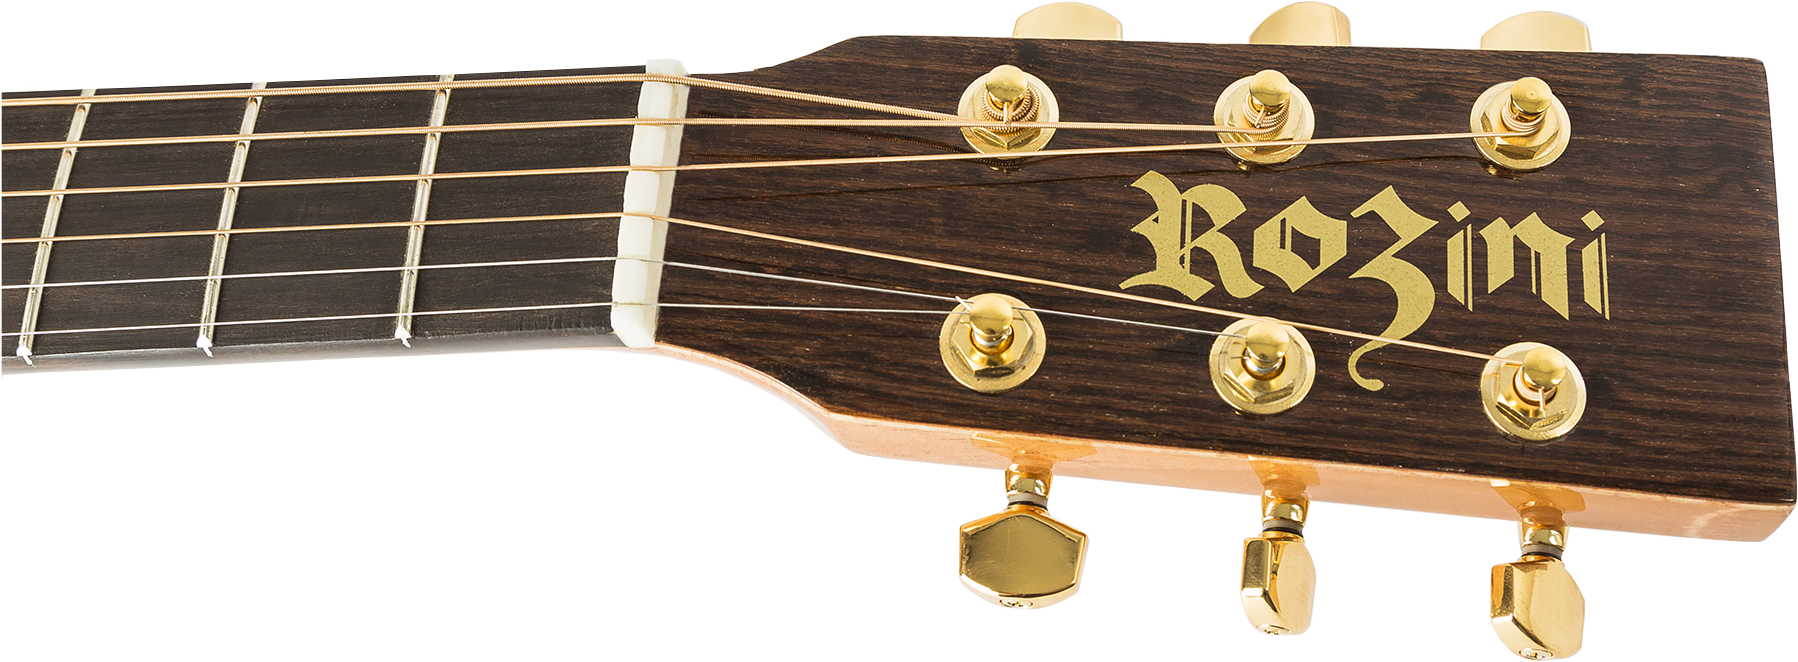 Guitar Headstock Closeup Rozini Brand